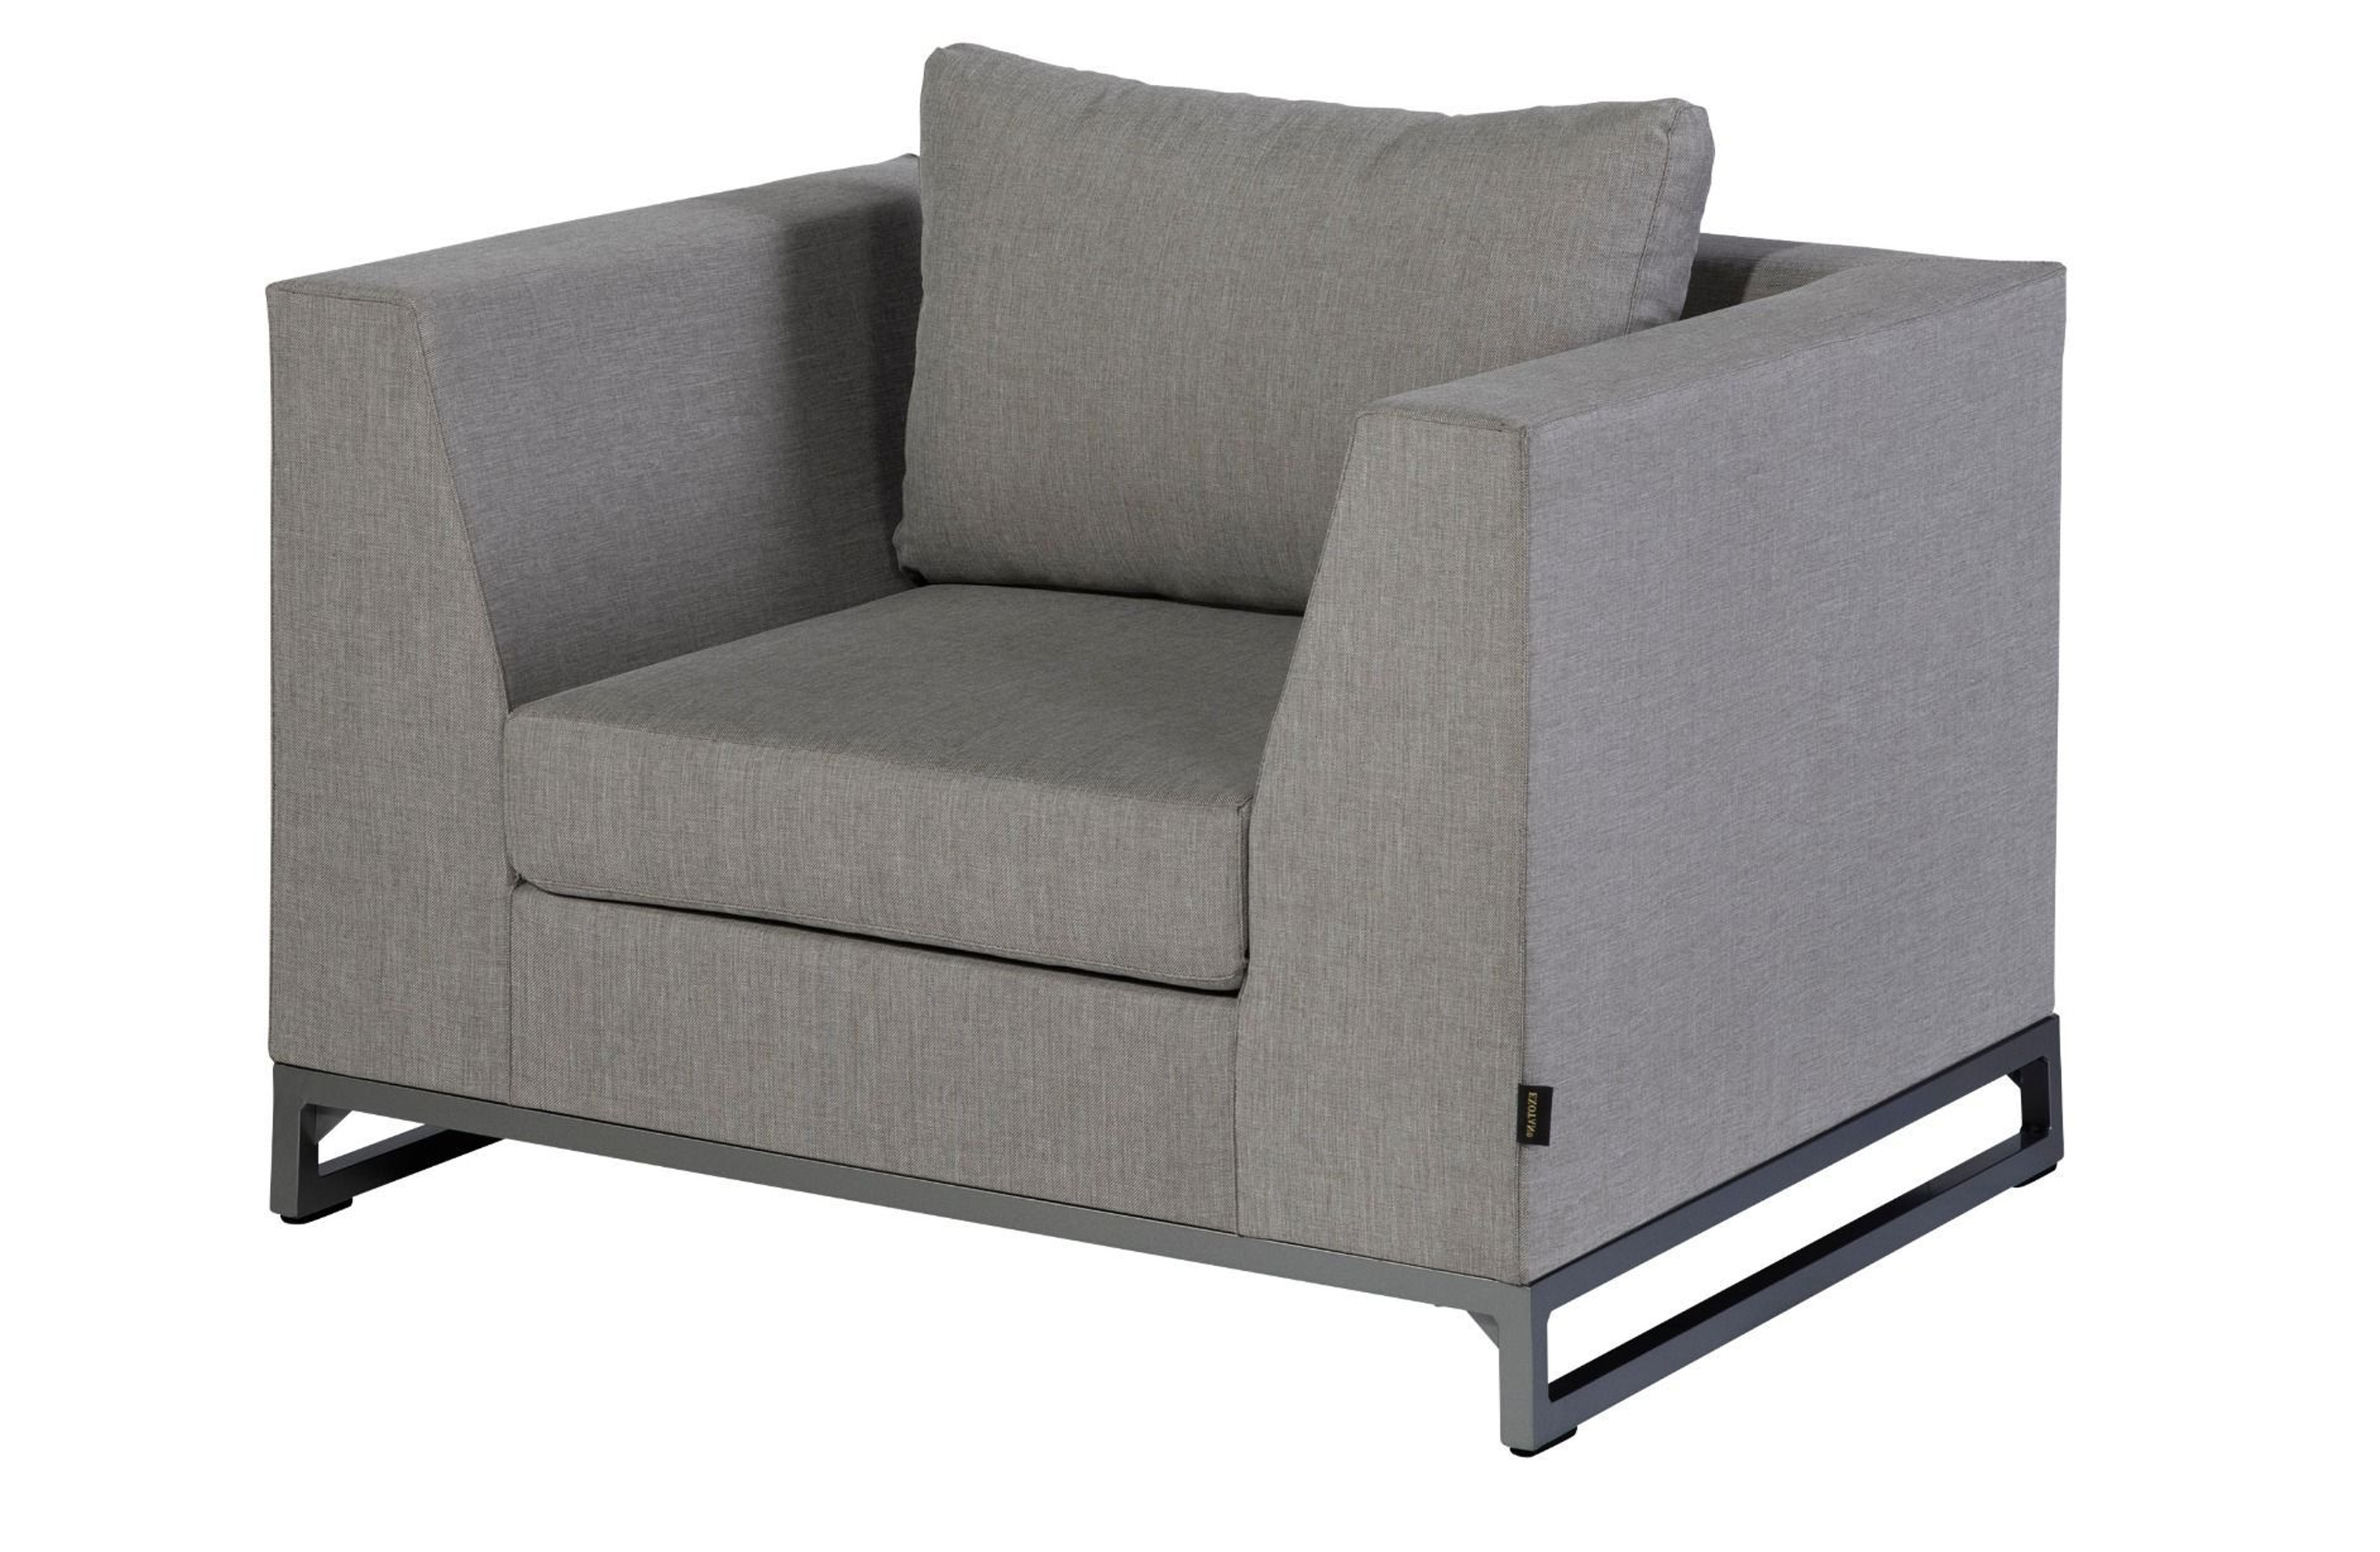 EXOTAN Rhodos loungestol til haven, m. armlæn - taupe stof og aluminium